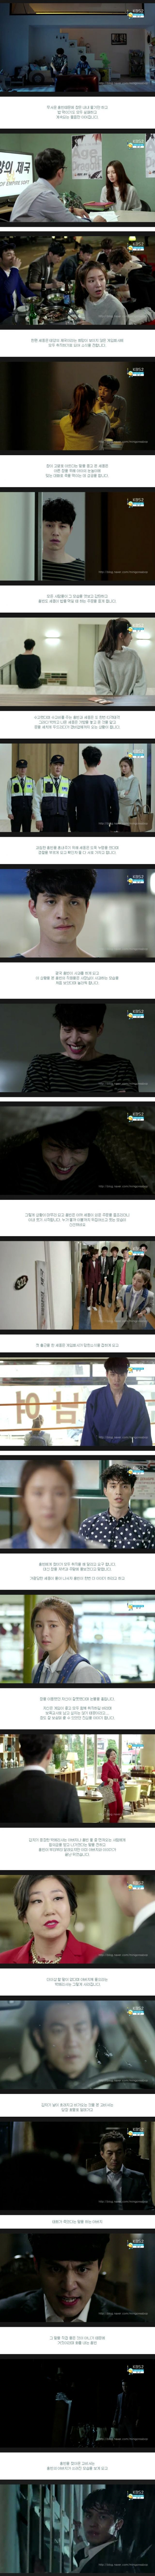 episode 3 captures for the Korean drama 'Blade Man'